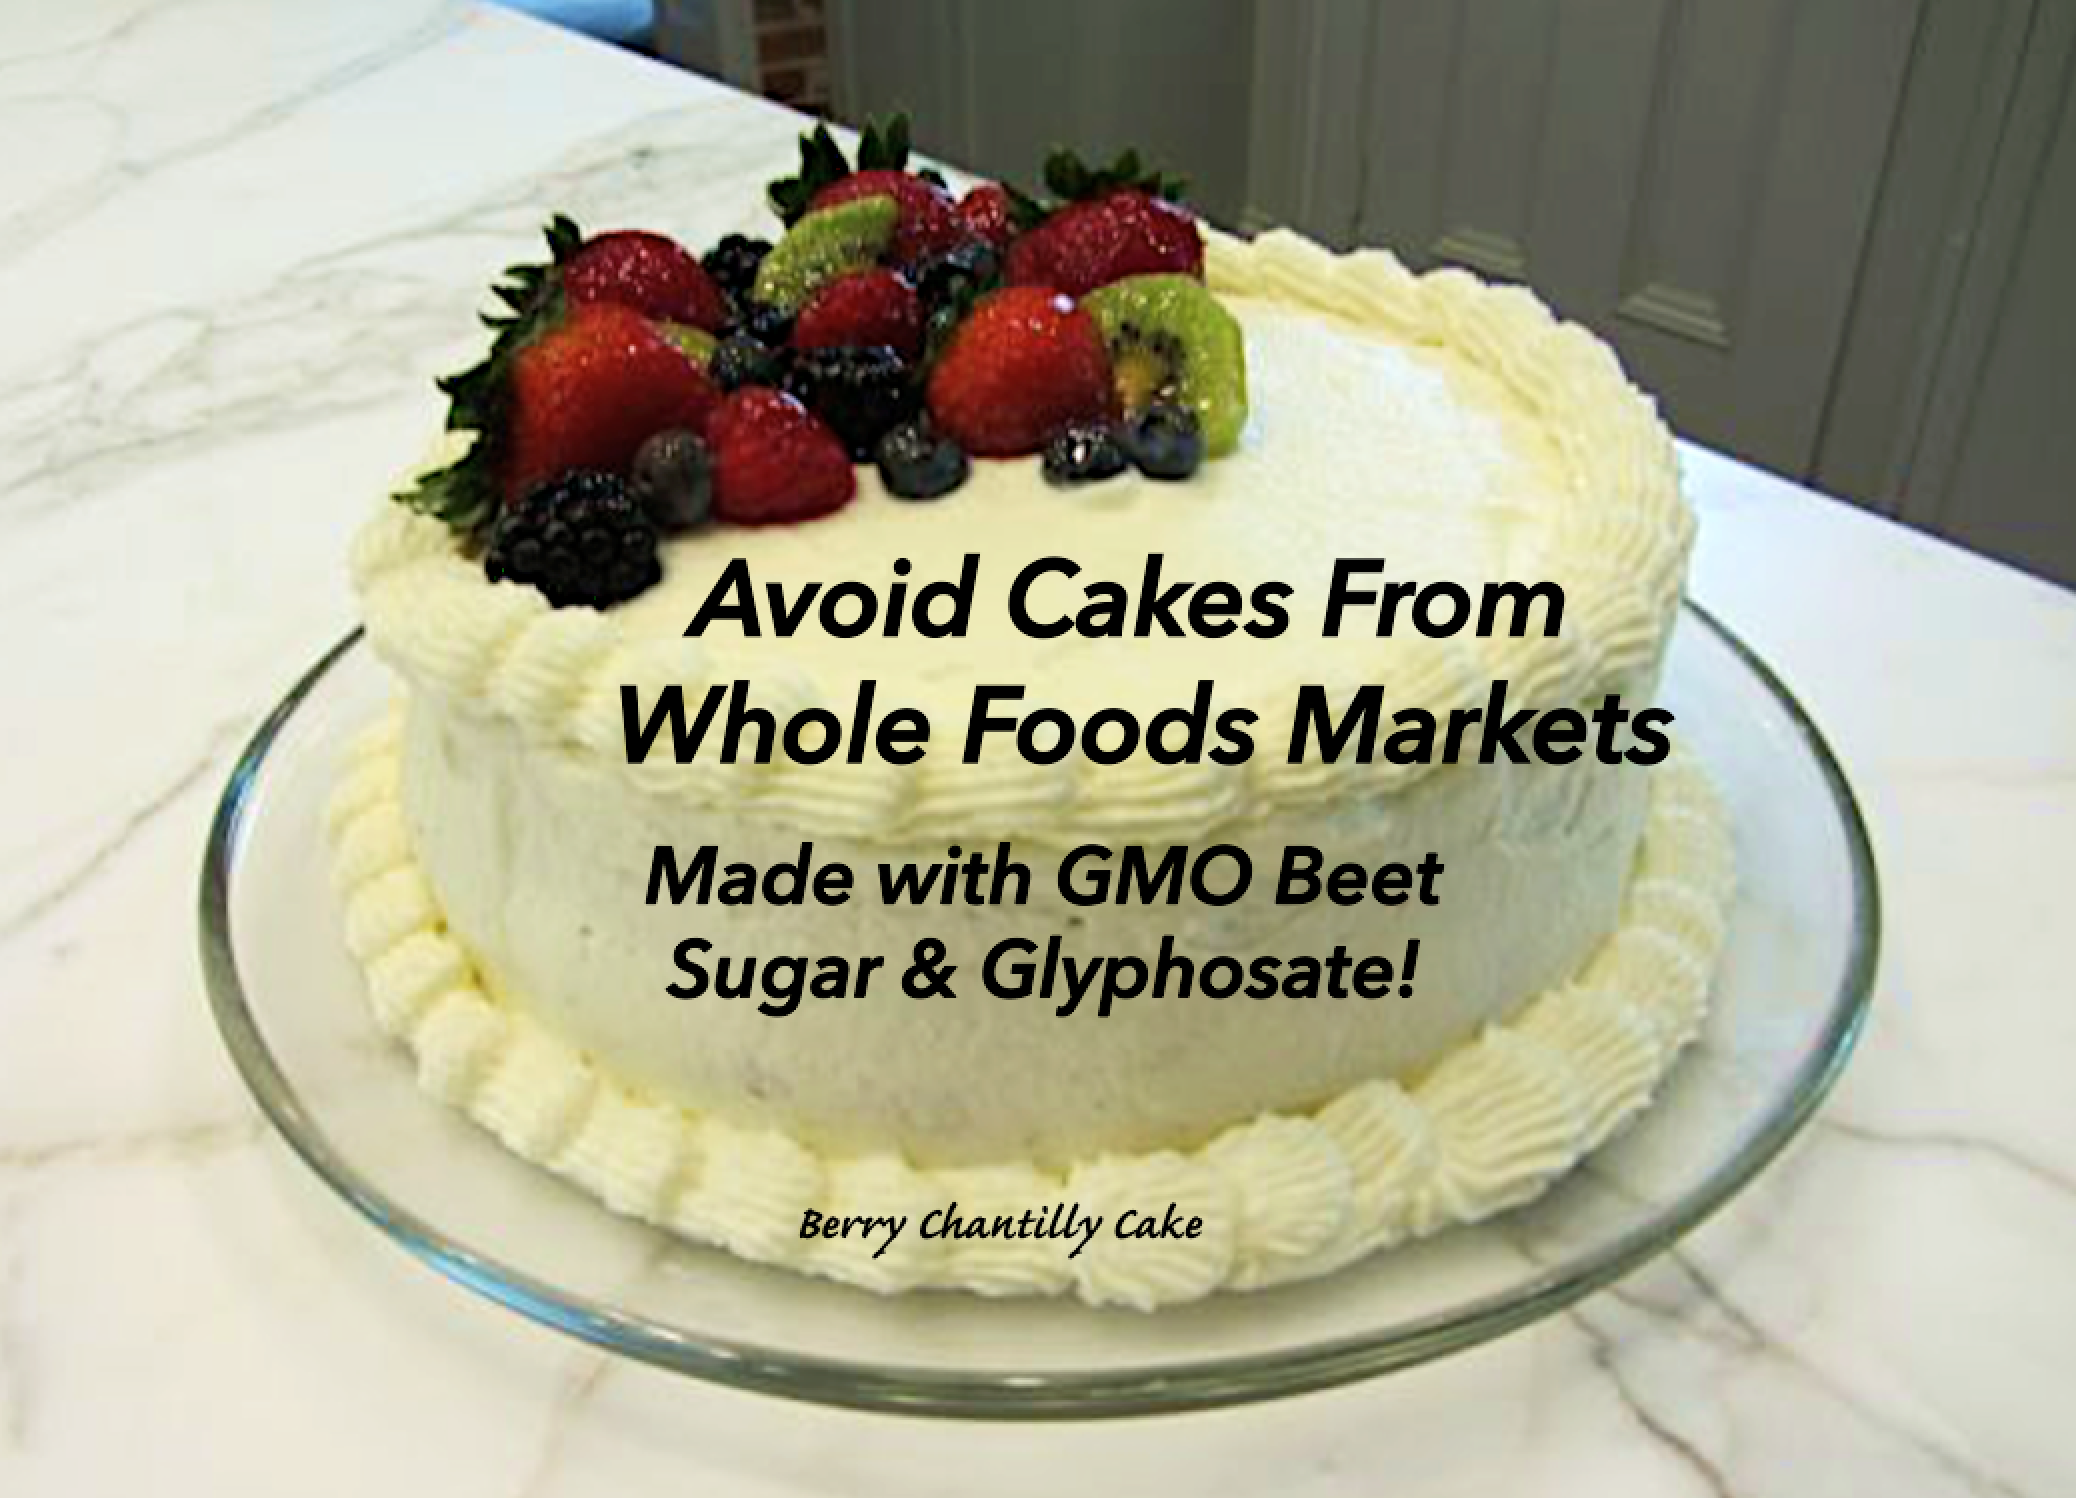 Avoid Whole Foods Markets Cakes  GMO Beet Sugar ...